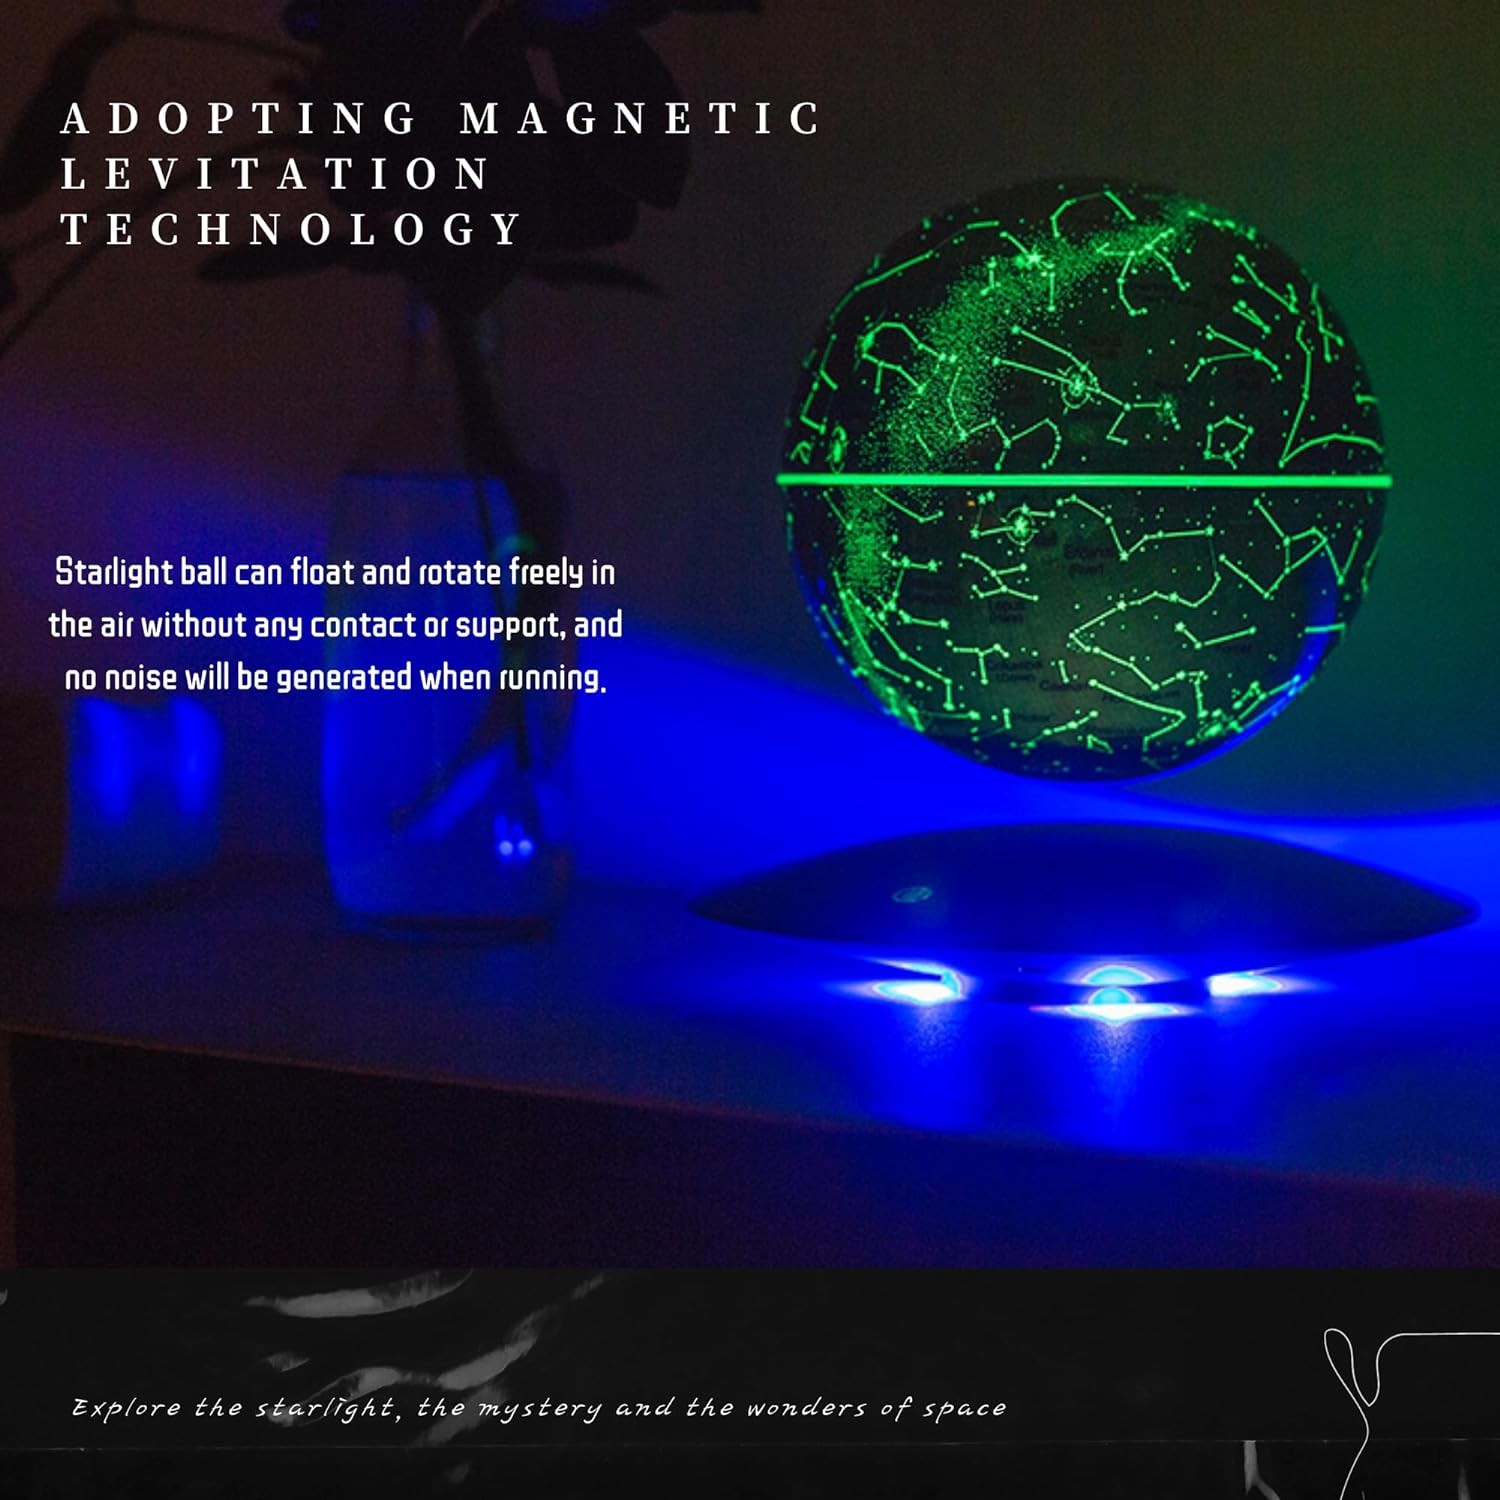 tehnologija levitacije - lebdeča okrogla namizna svetilka